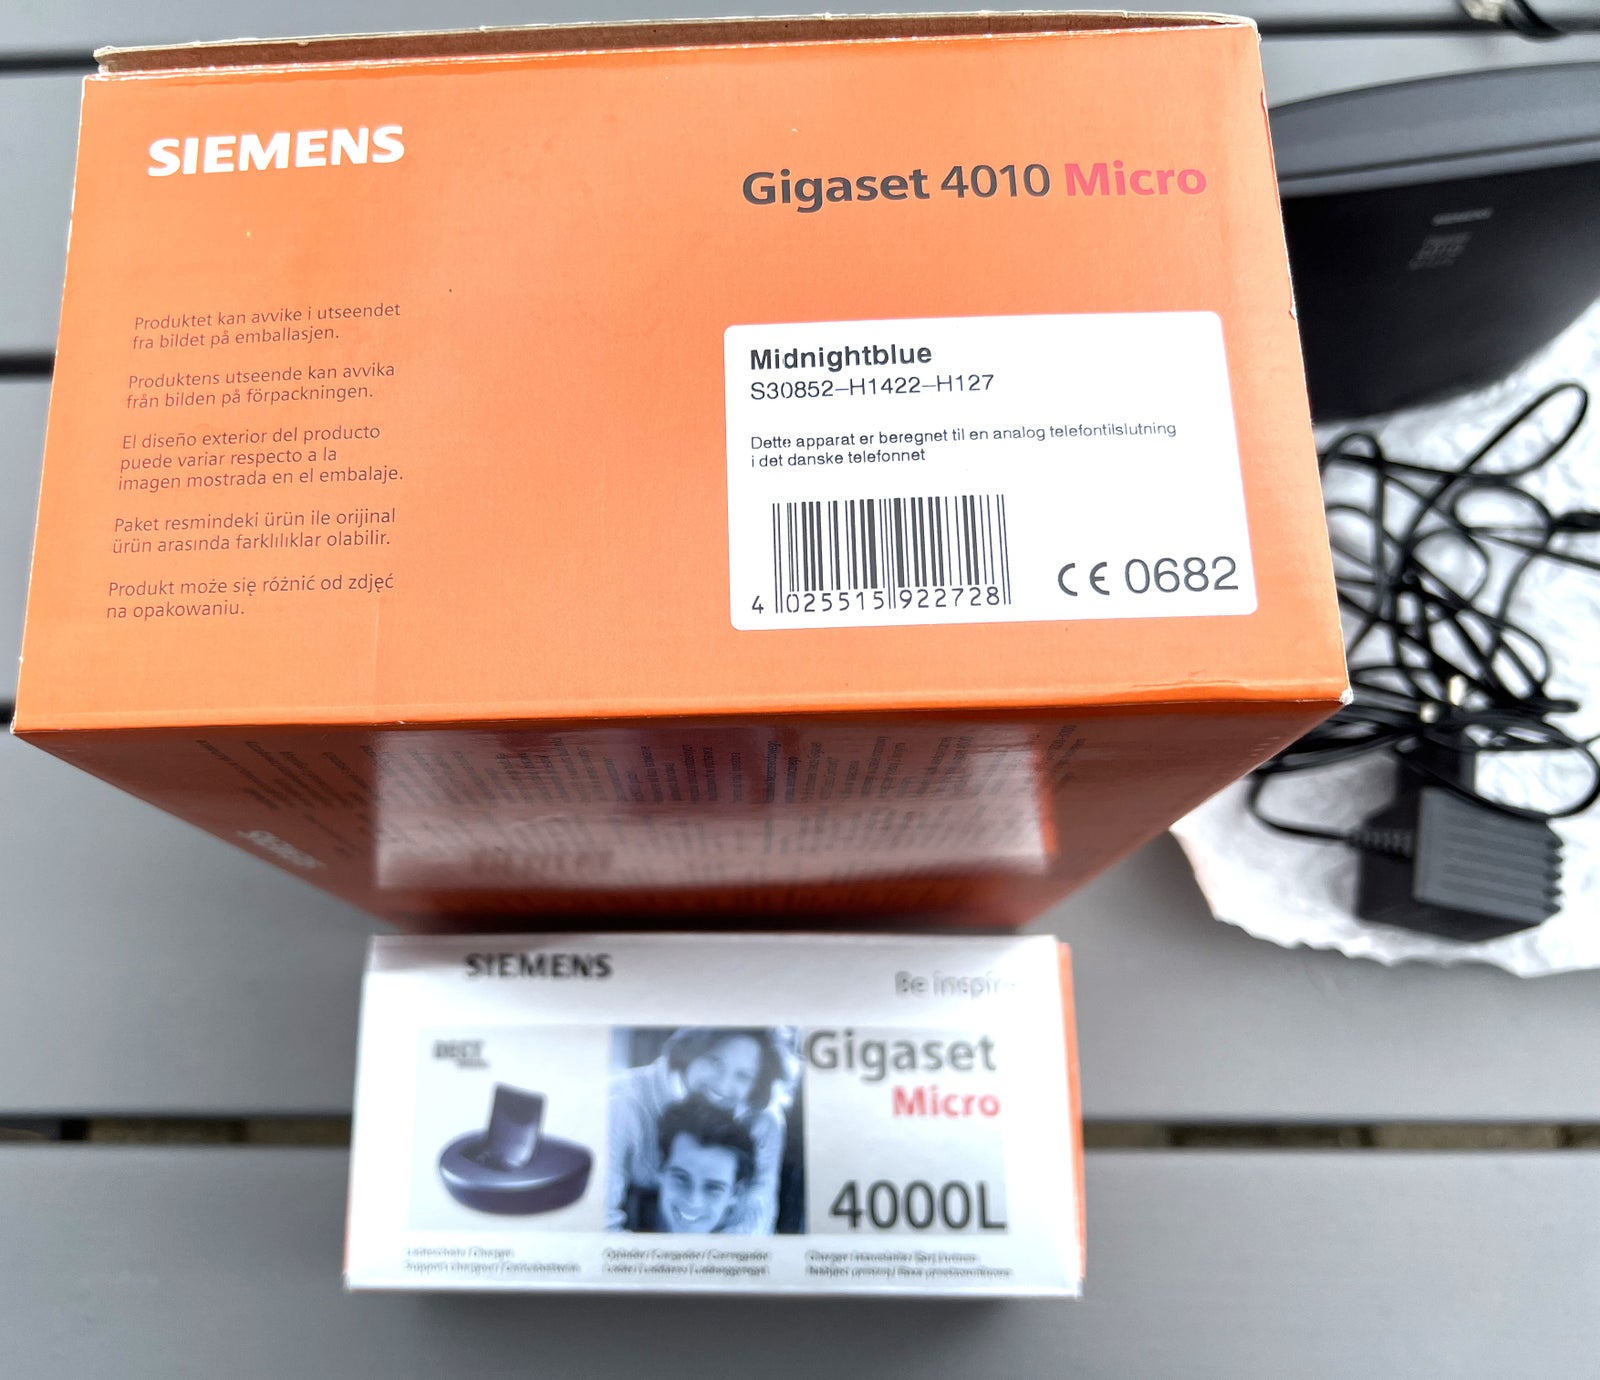 Siemens, Gigaset micro 4000L, God